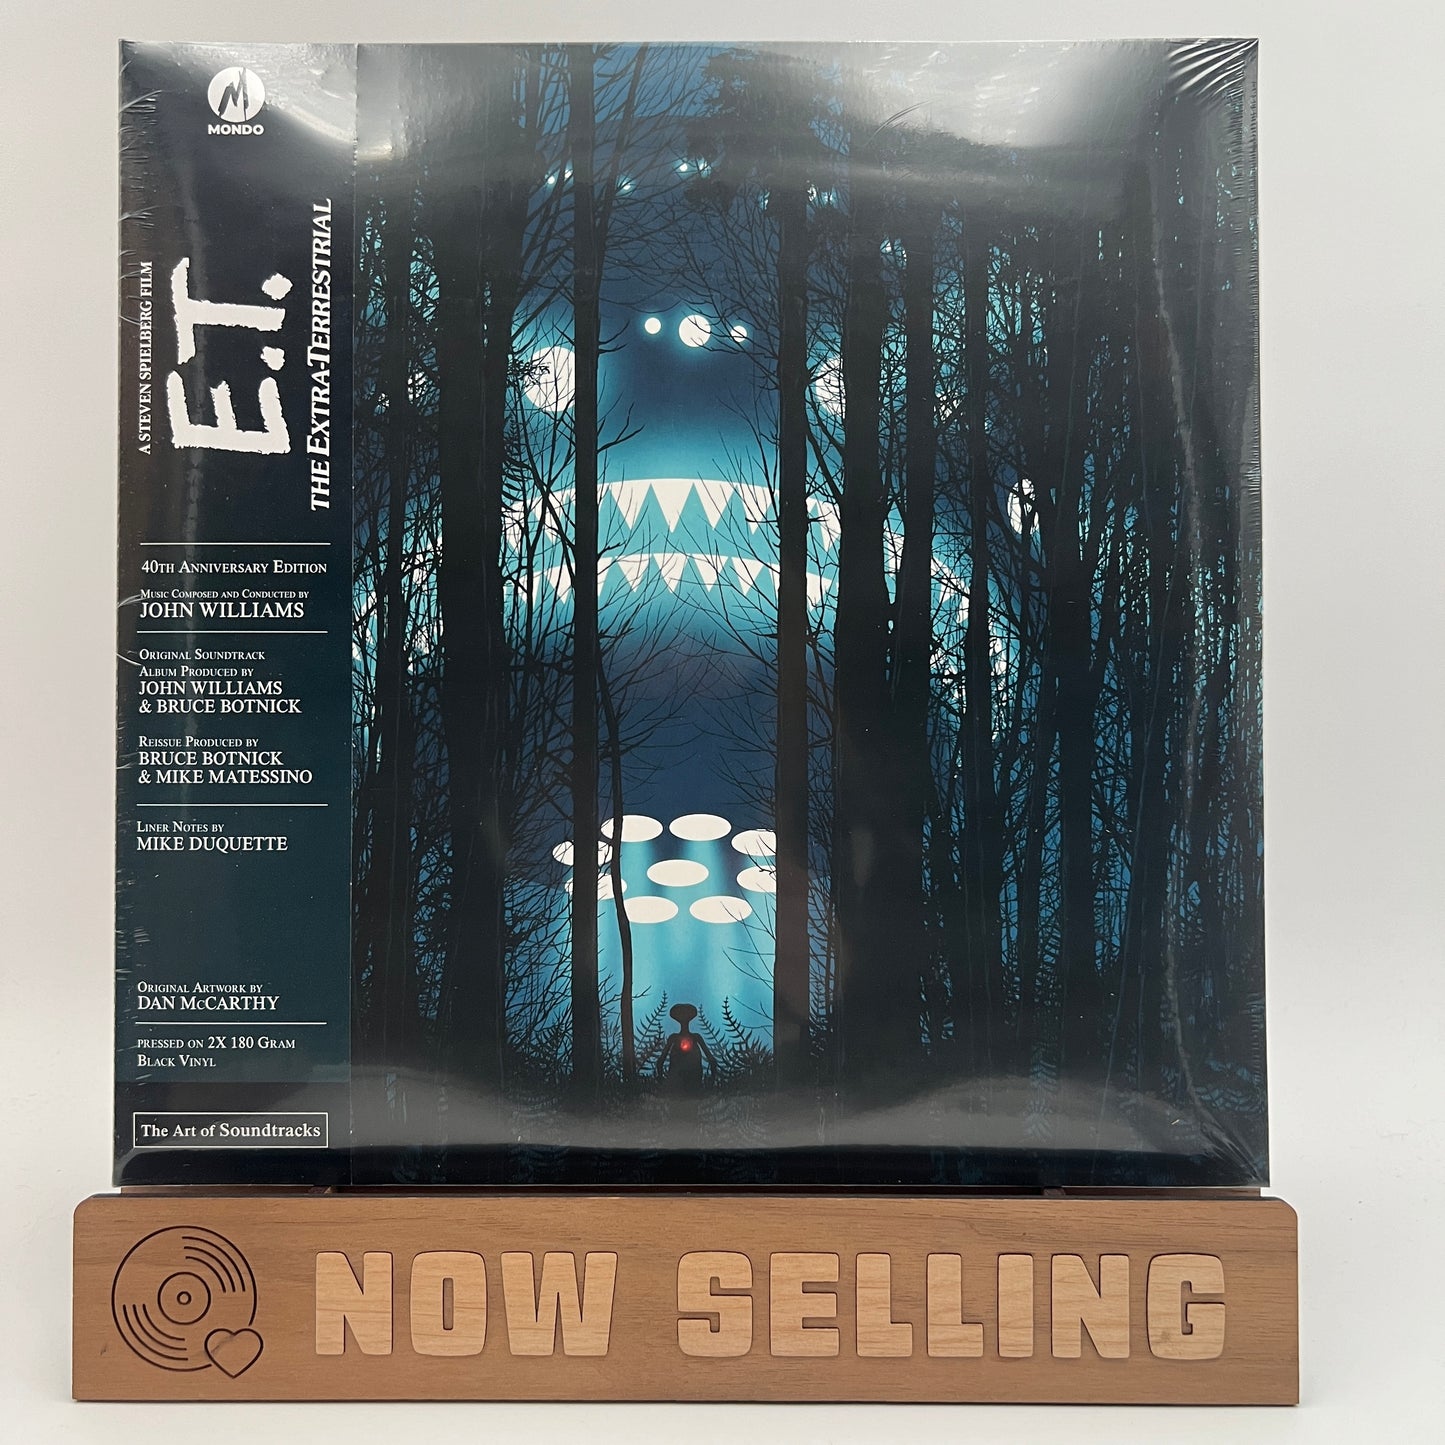 E.T. The Extra-Terrestrial Soundtrack Vinyl LP SEALED John Williams